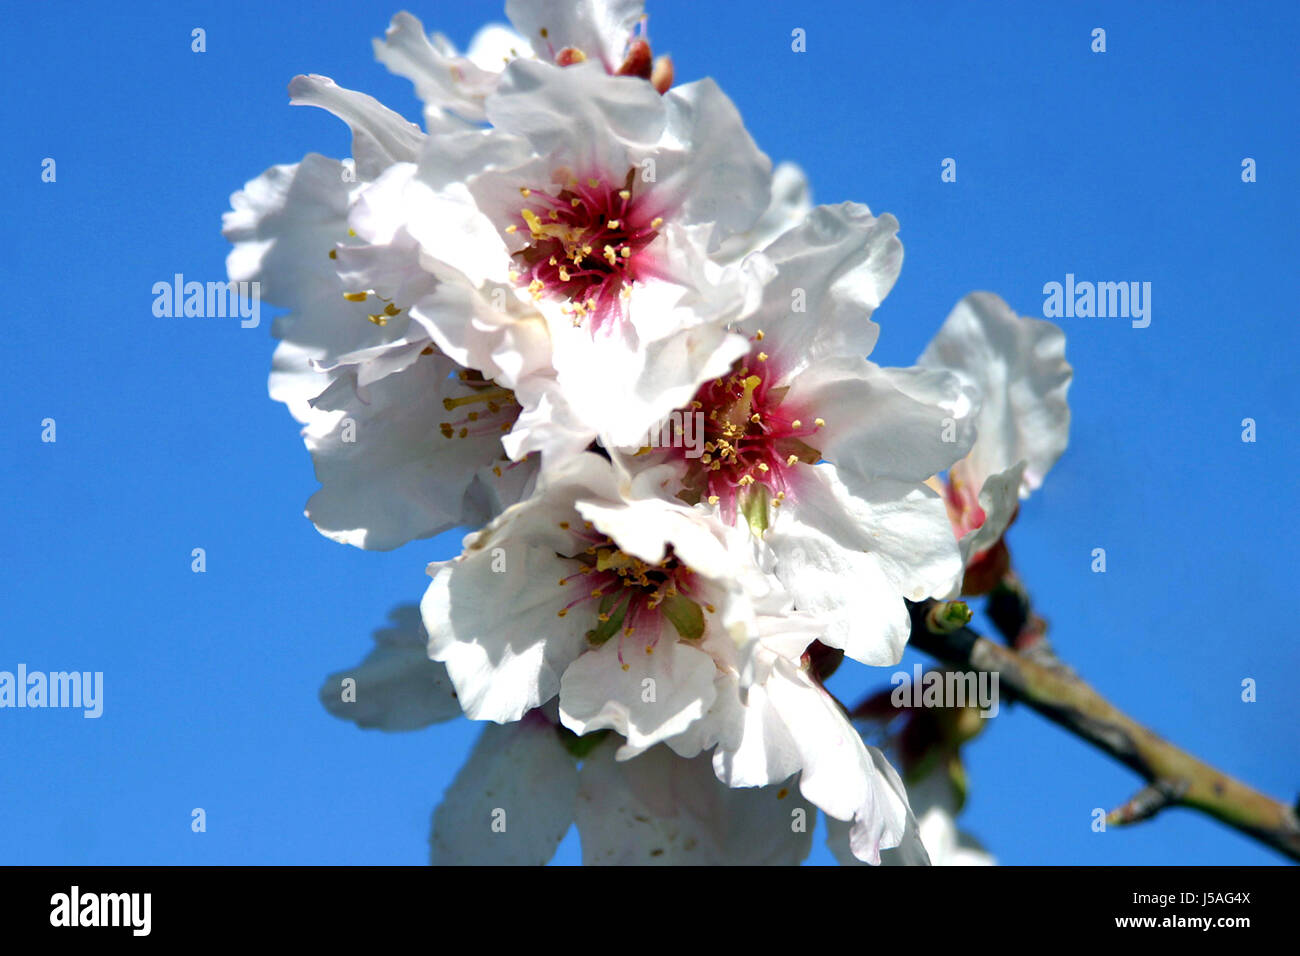 tree flower plant bloom blossom flourish flourishing spain canary islands Stock Photo